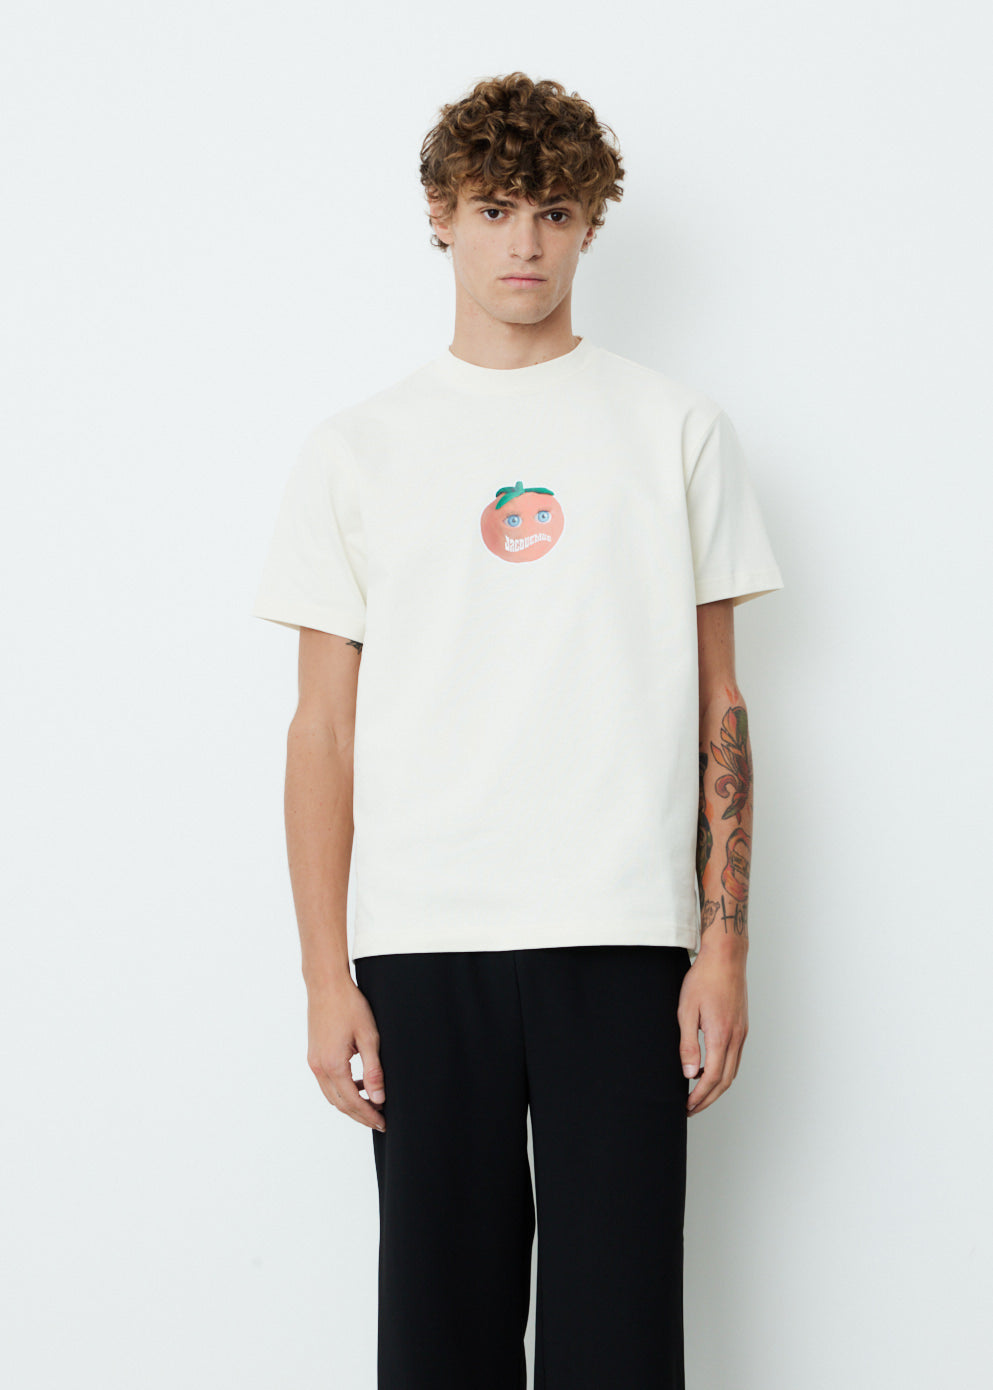 Le T-Shirt Tomate